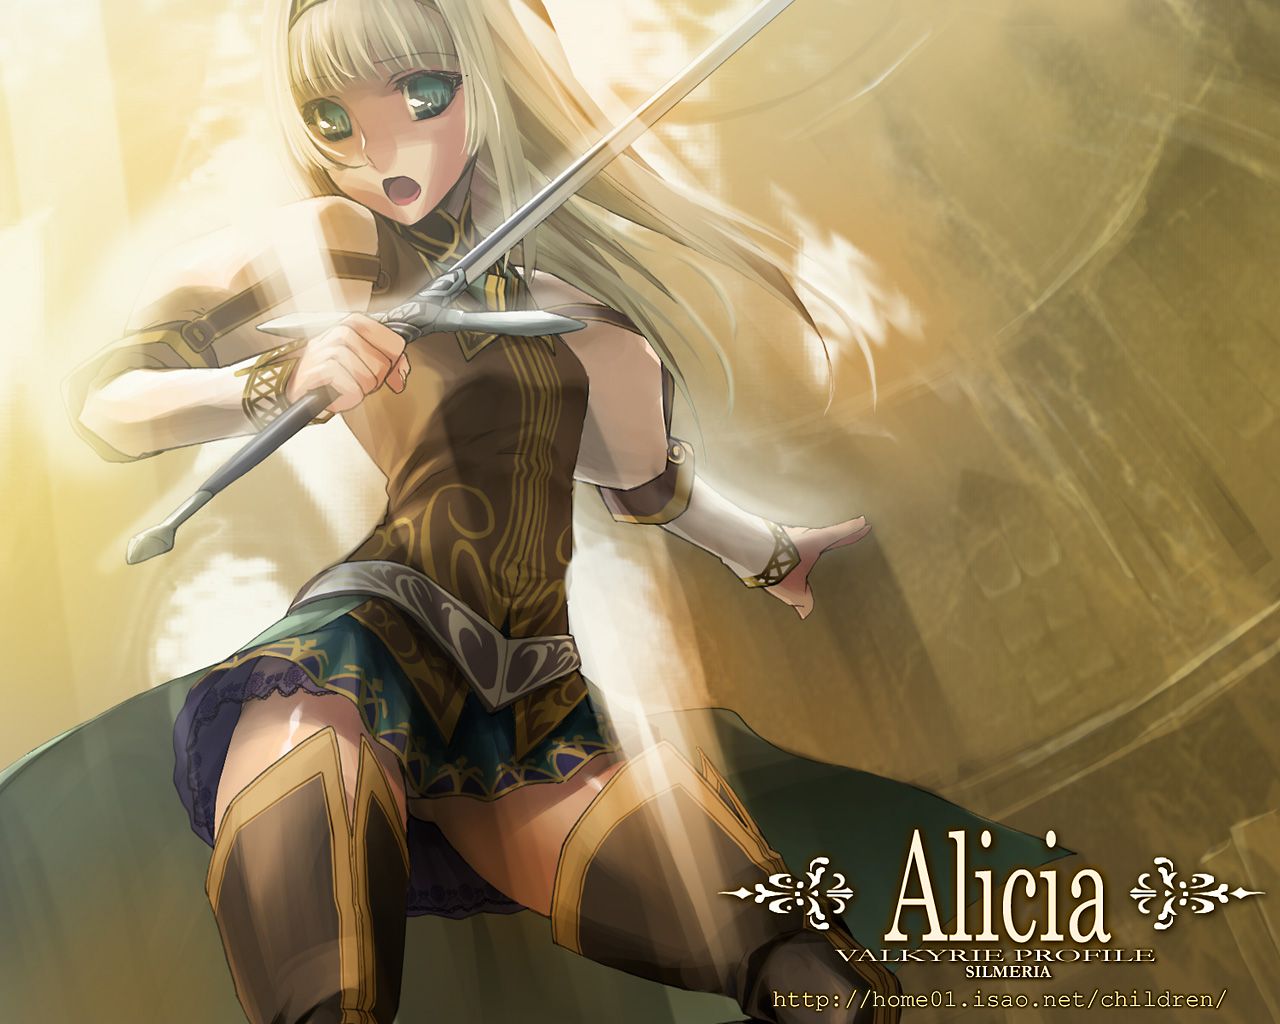 alicia valkyrie profile. konachan.com.com Anime Wallpaper